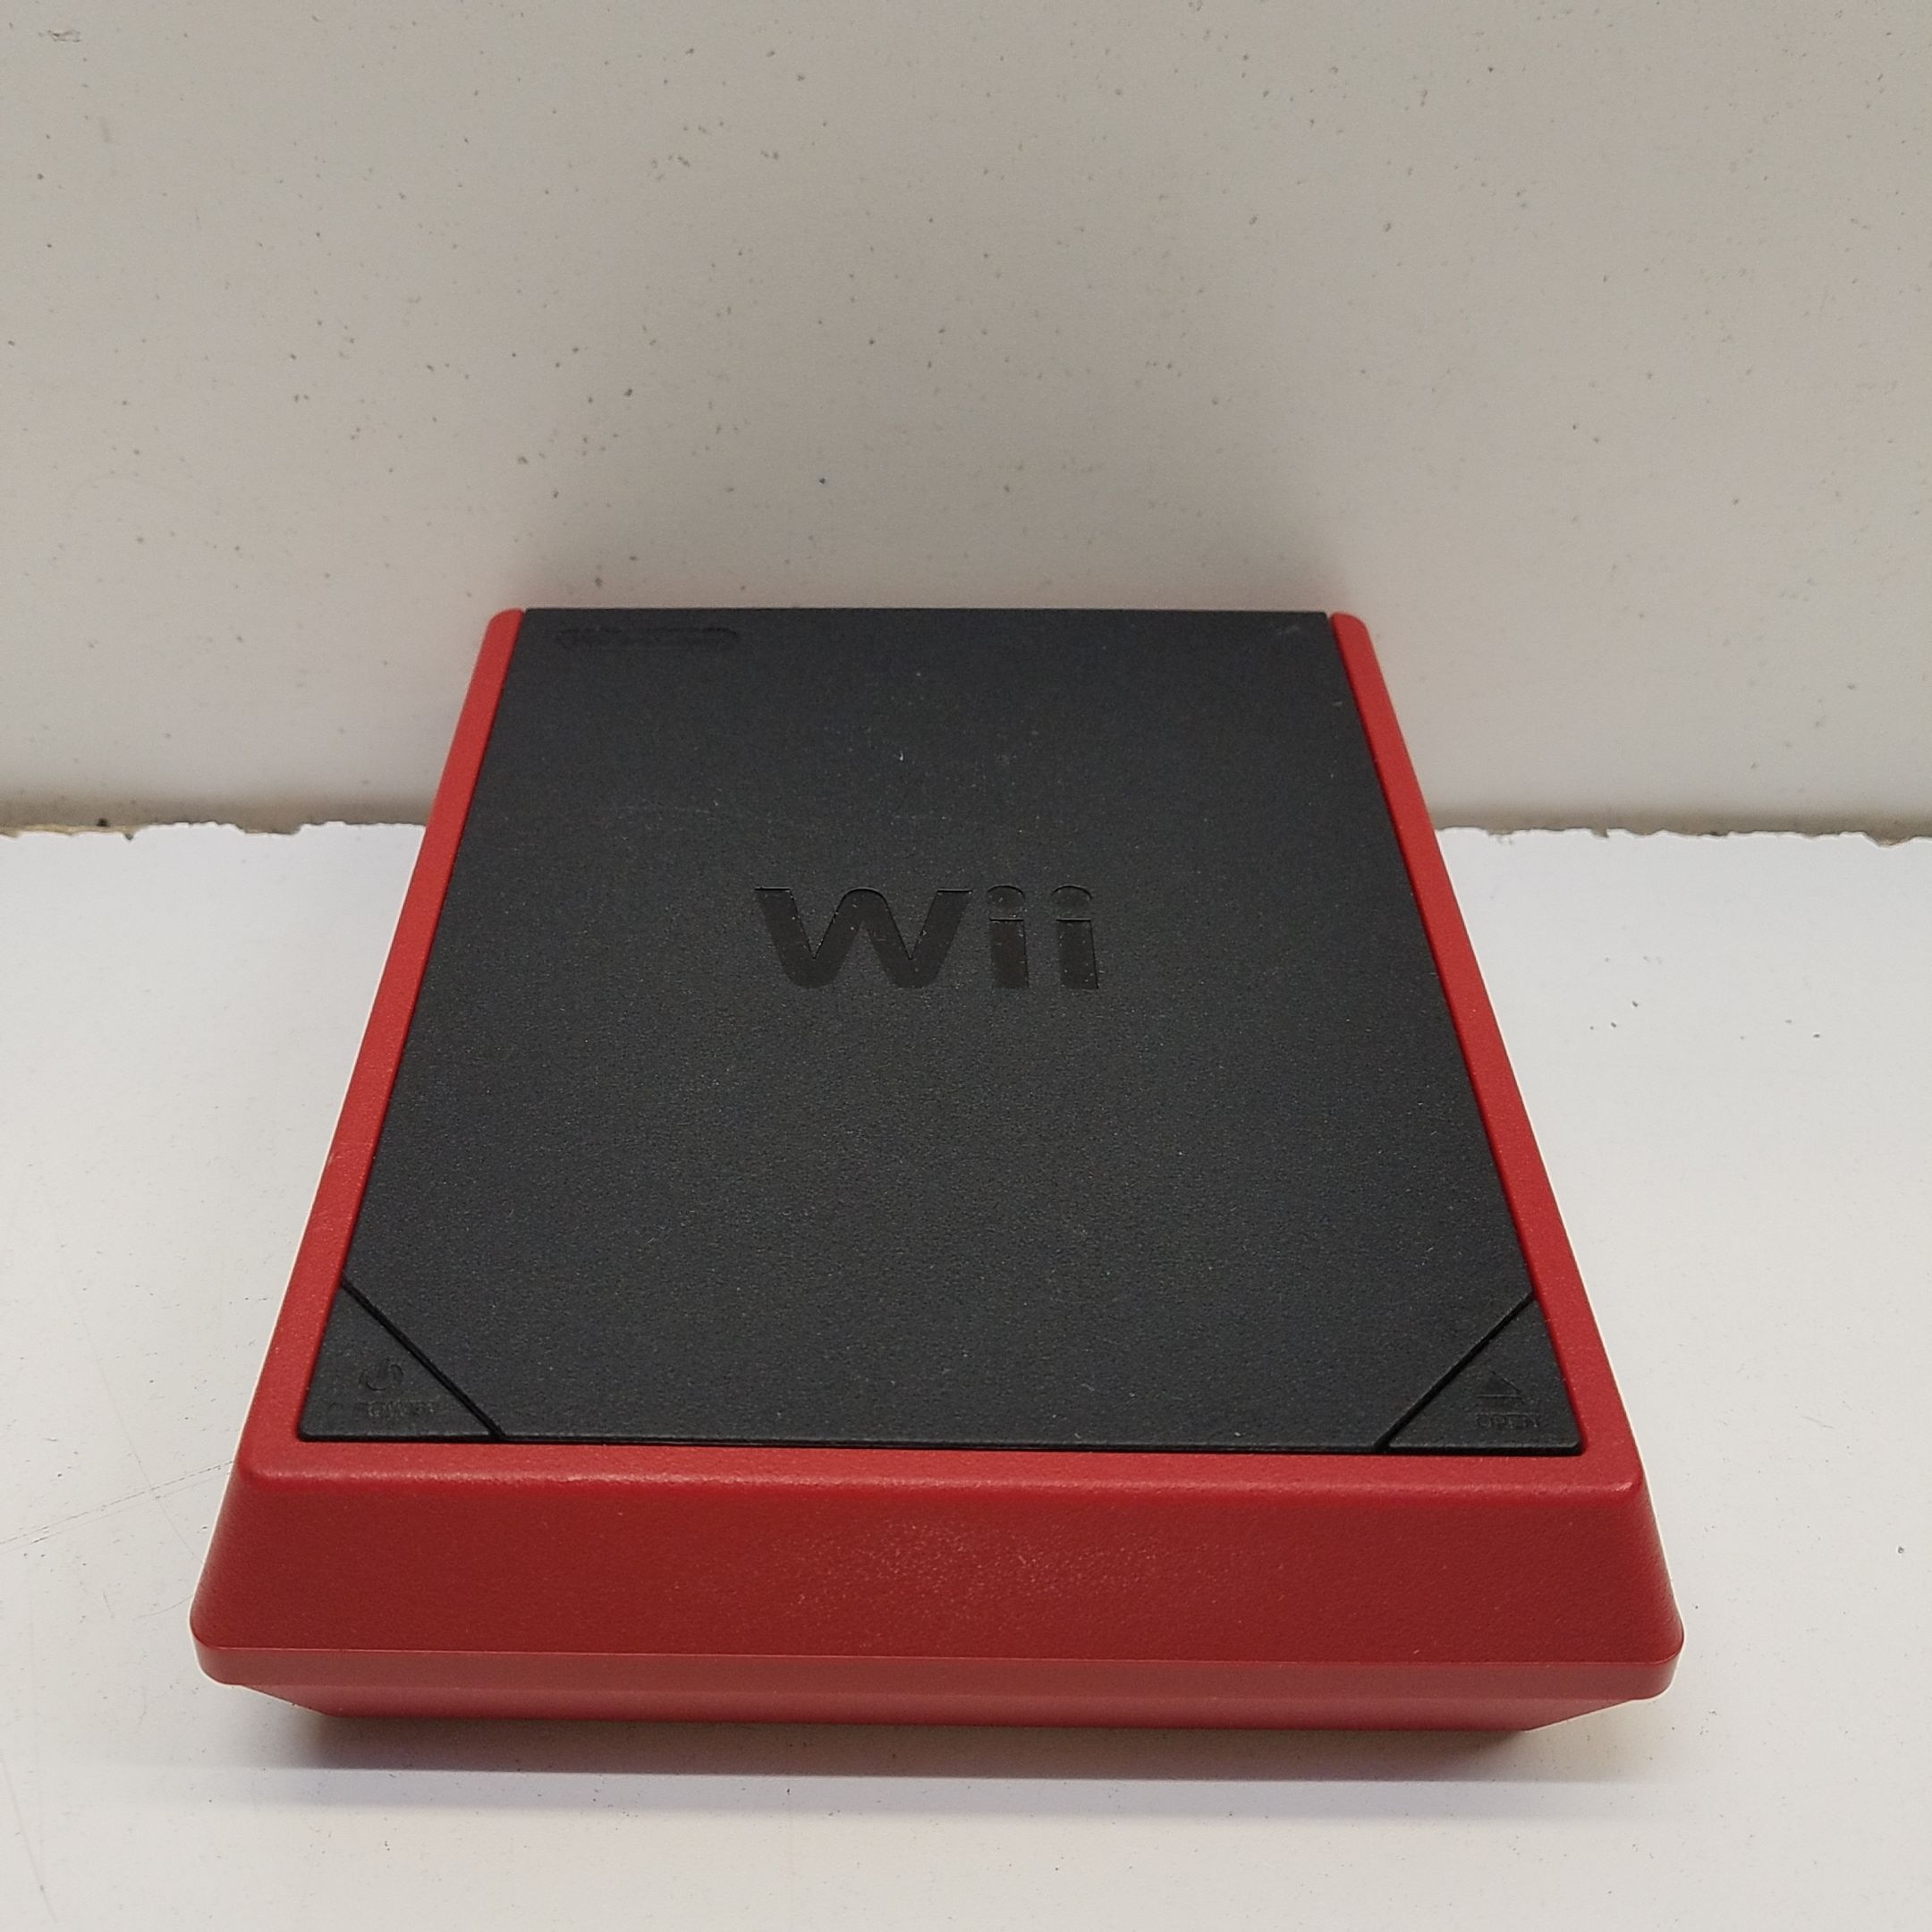 Buy Nintendo Wii mini for a good price